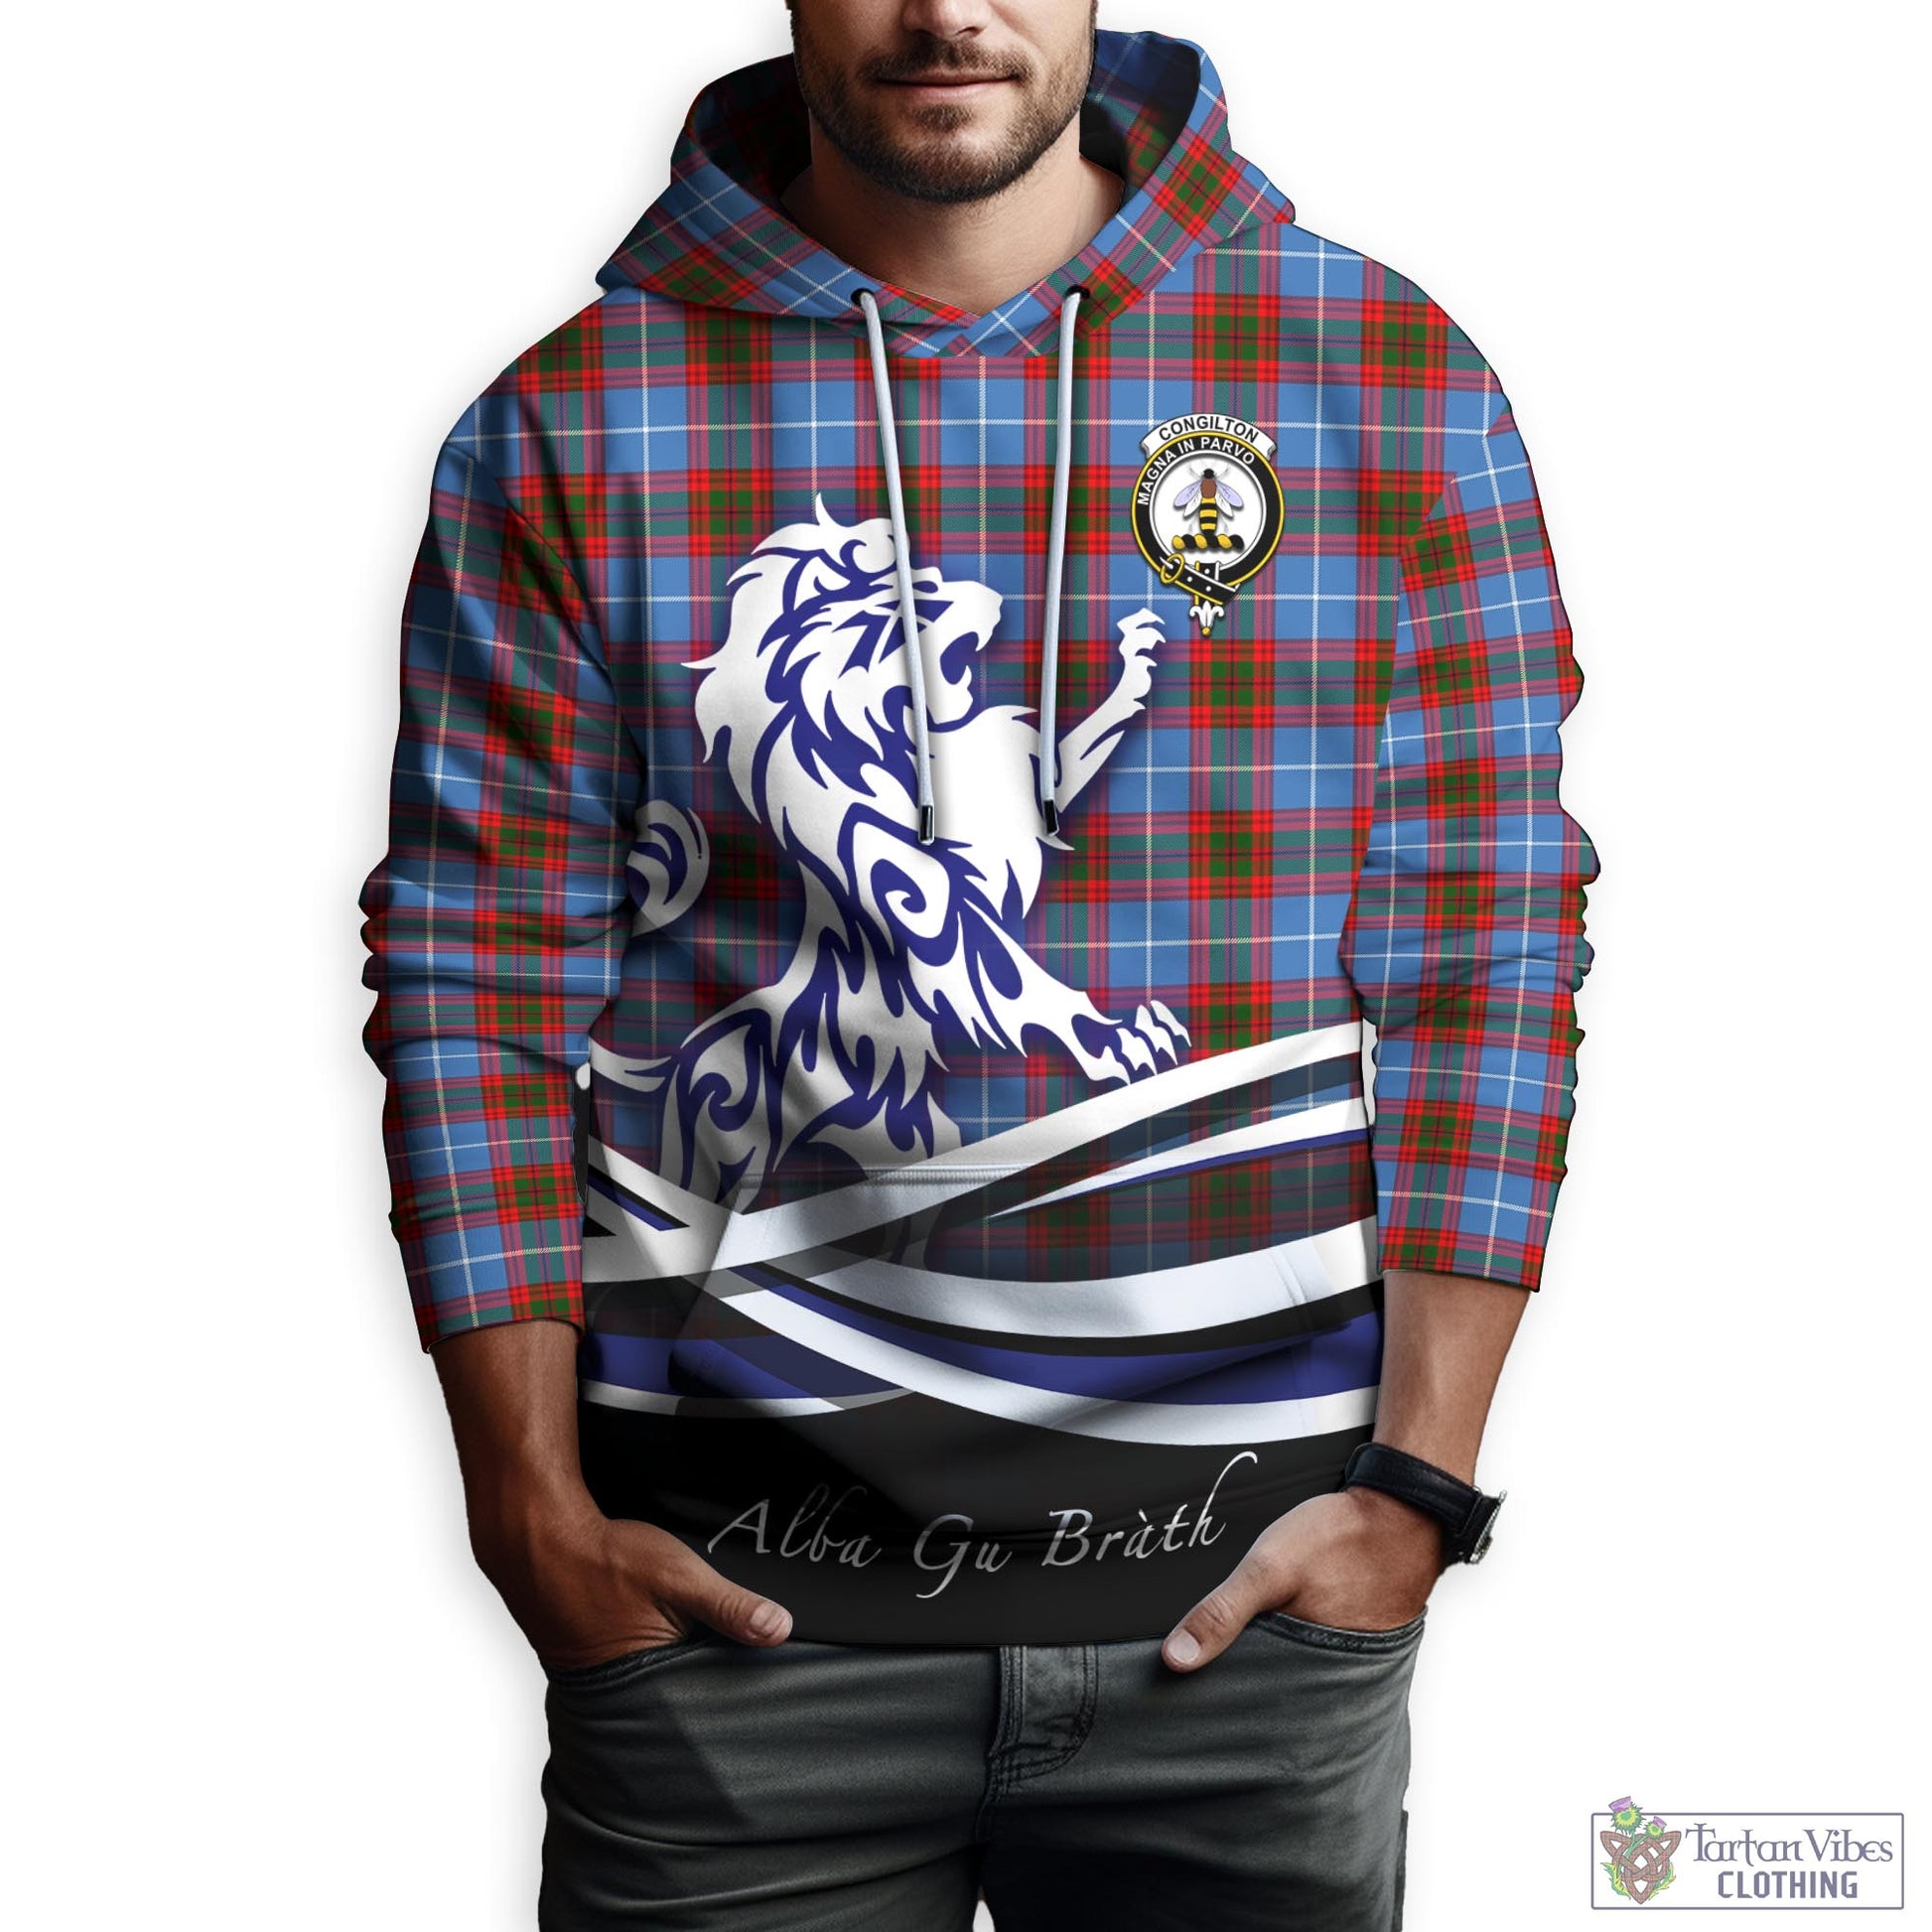 congilton-tartan-hoodie-with-alba-gu-brath-regal-lion-emblem